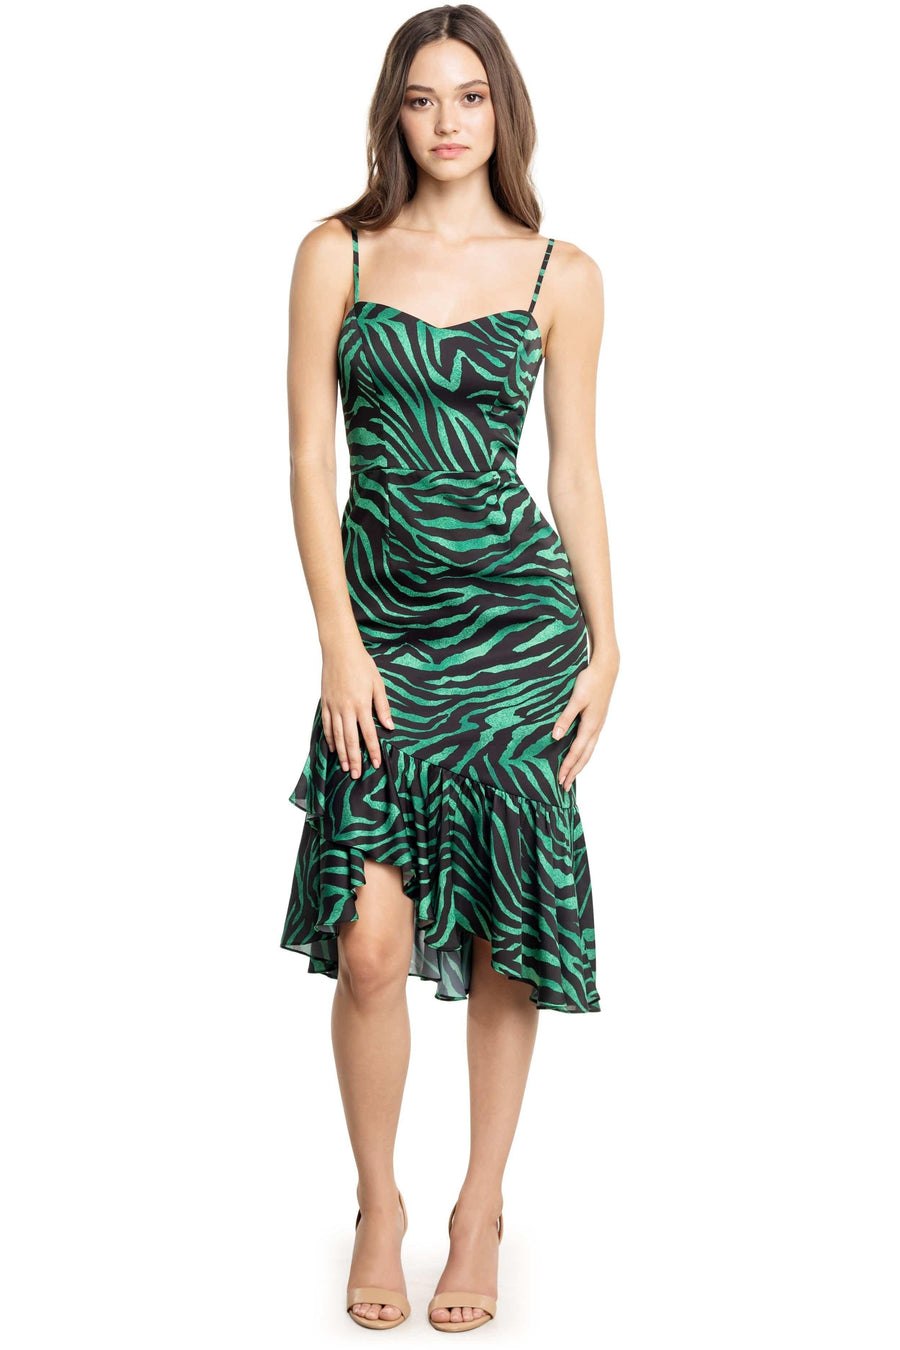 Cantrelle Zebra Print Asymmetrical Dress - Dress the Population